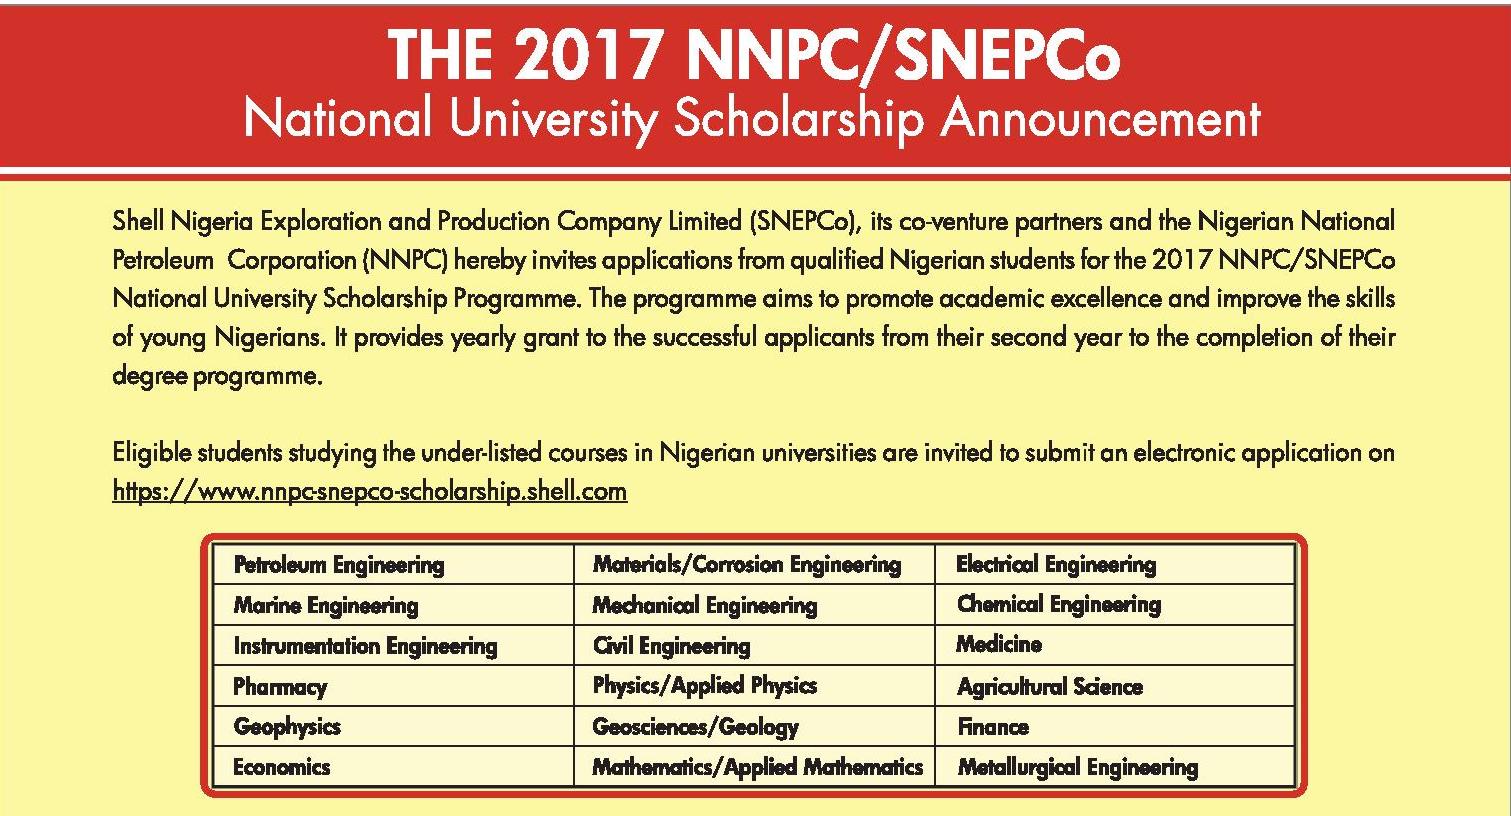 NNPC/SNEPCo National University Scholarship